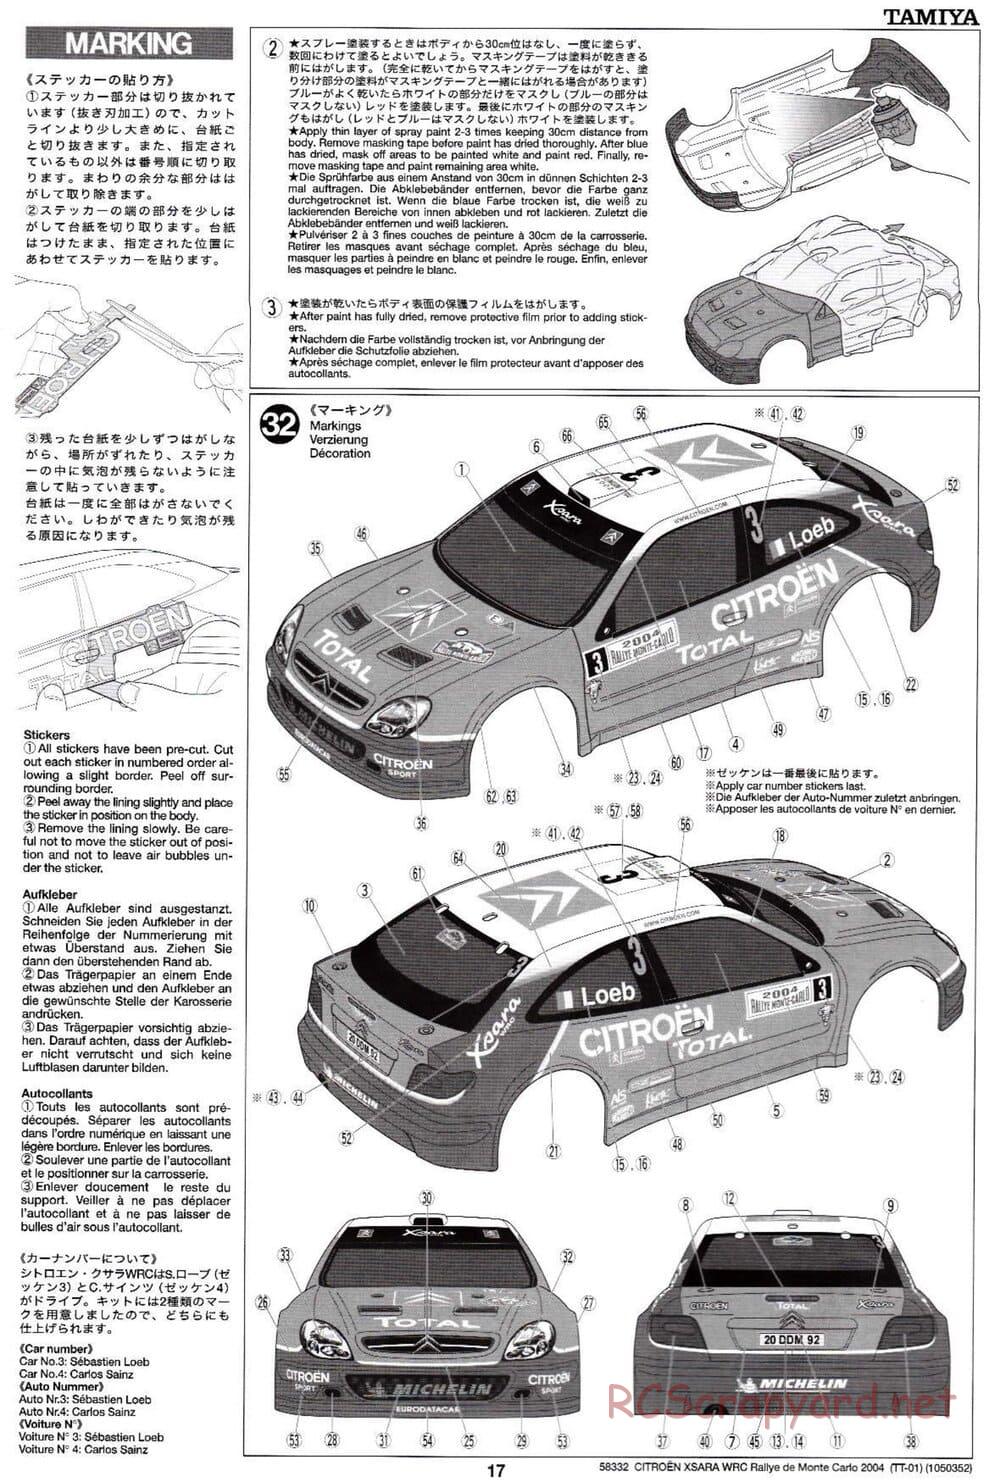 Tamiya - Citroen Xsara WRC Rallye De Monte Carlo 2004 - TT-01 Chassis - Manual - Page 17